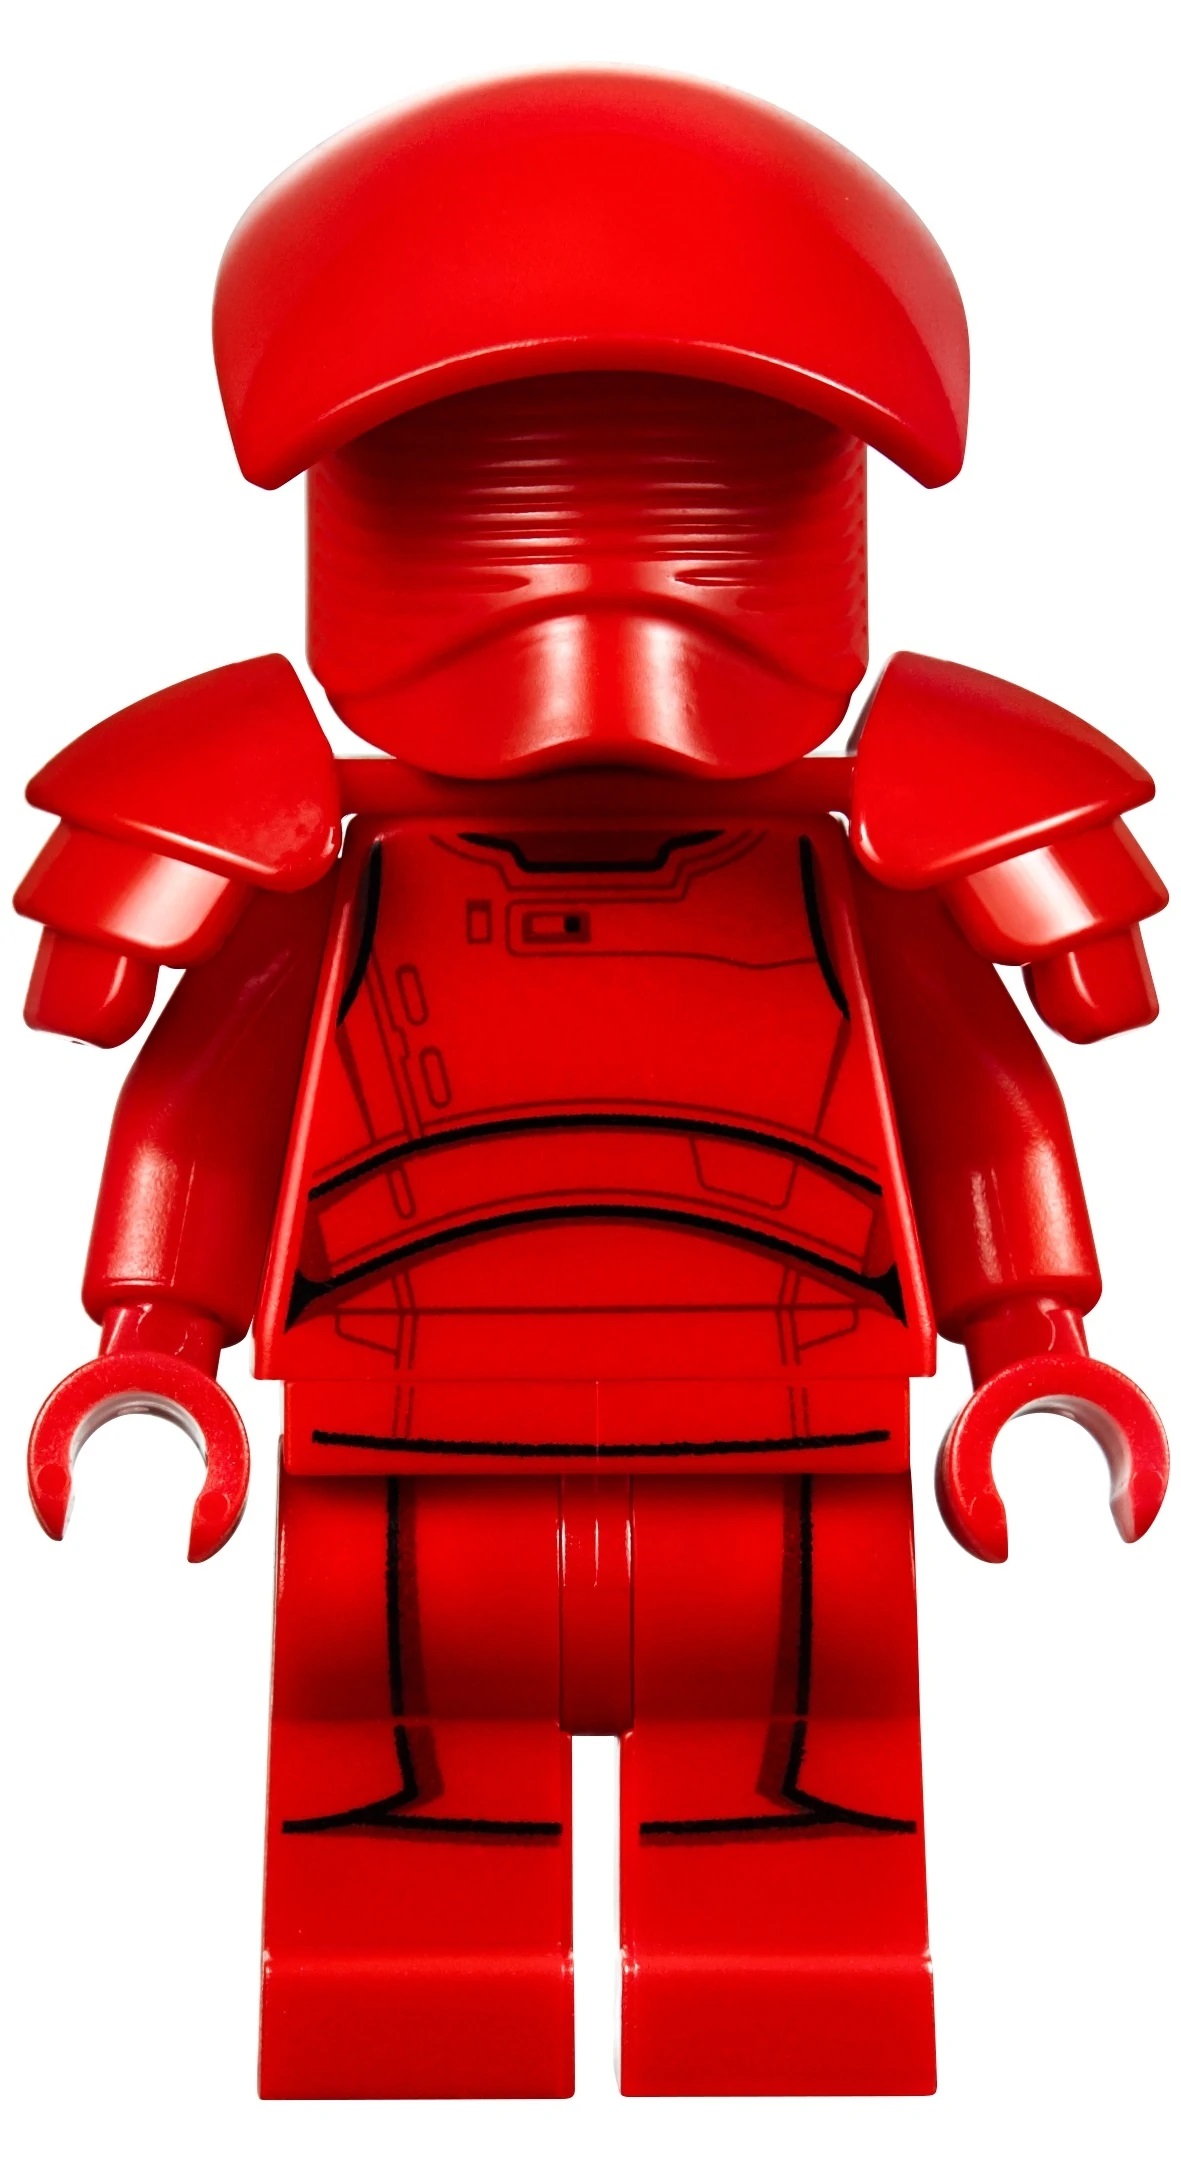 Version1 Lego Star Wars Elite Praetorian Guard minifigure from set 75225 